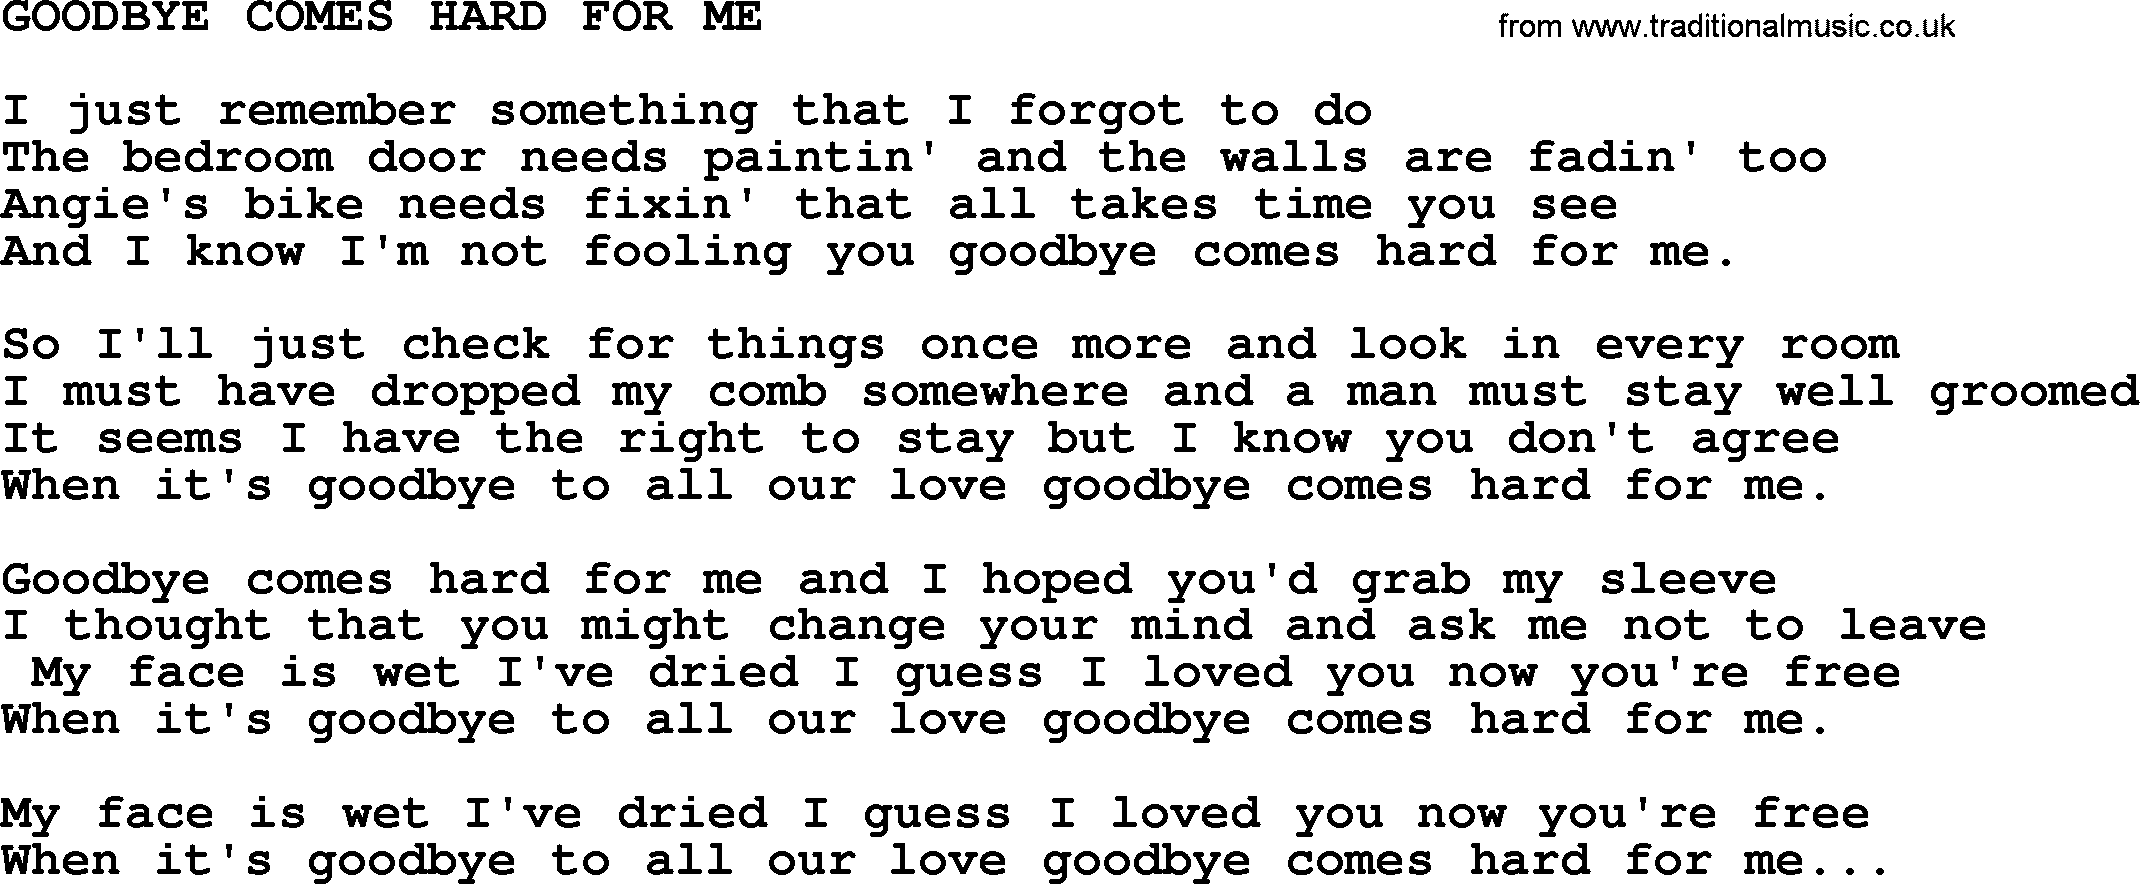 Merle Haggard song: Goodbye Comes Hard For Me, lyrics.